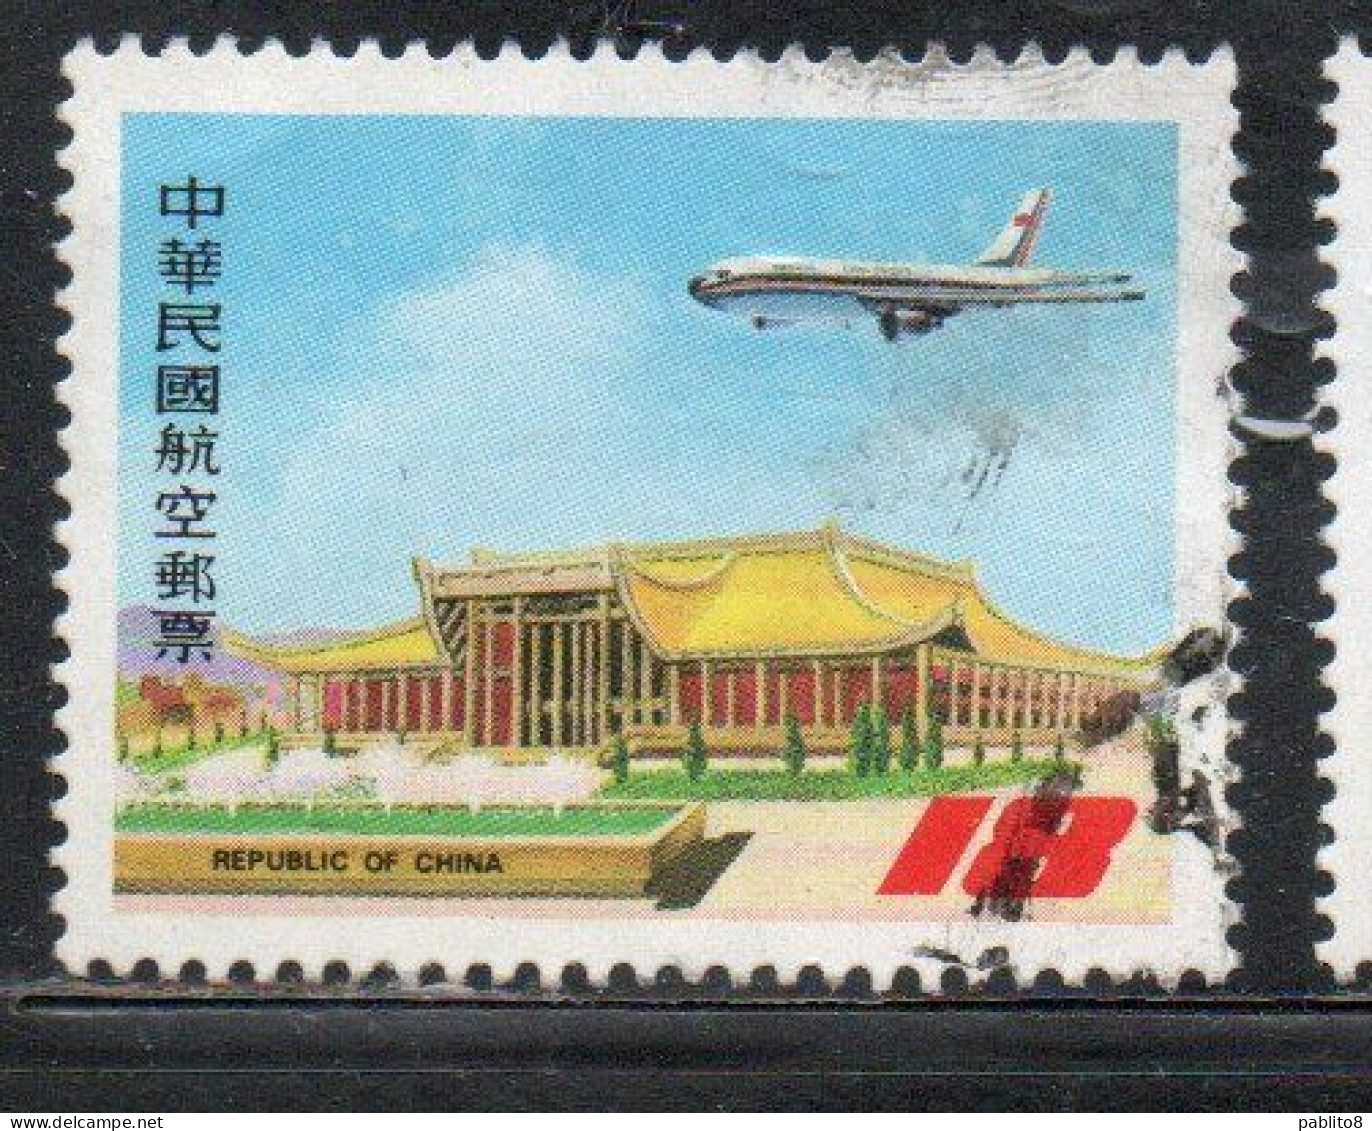 CHINA REPUBLIC CINA TAIWAN FORMOSA 1984 AIR POST MAIL AIRMAIL CIVIL AERONAUTICS ADMINISTRATION SUN YAT-SEN 18$ USED - Posta Aerea